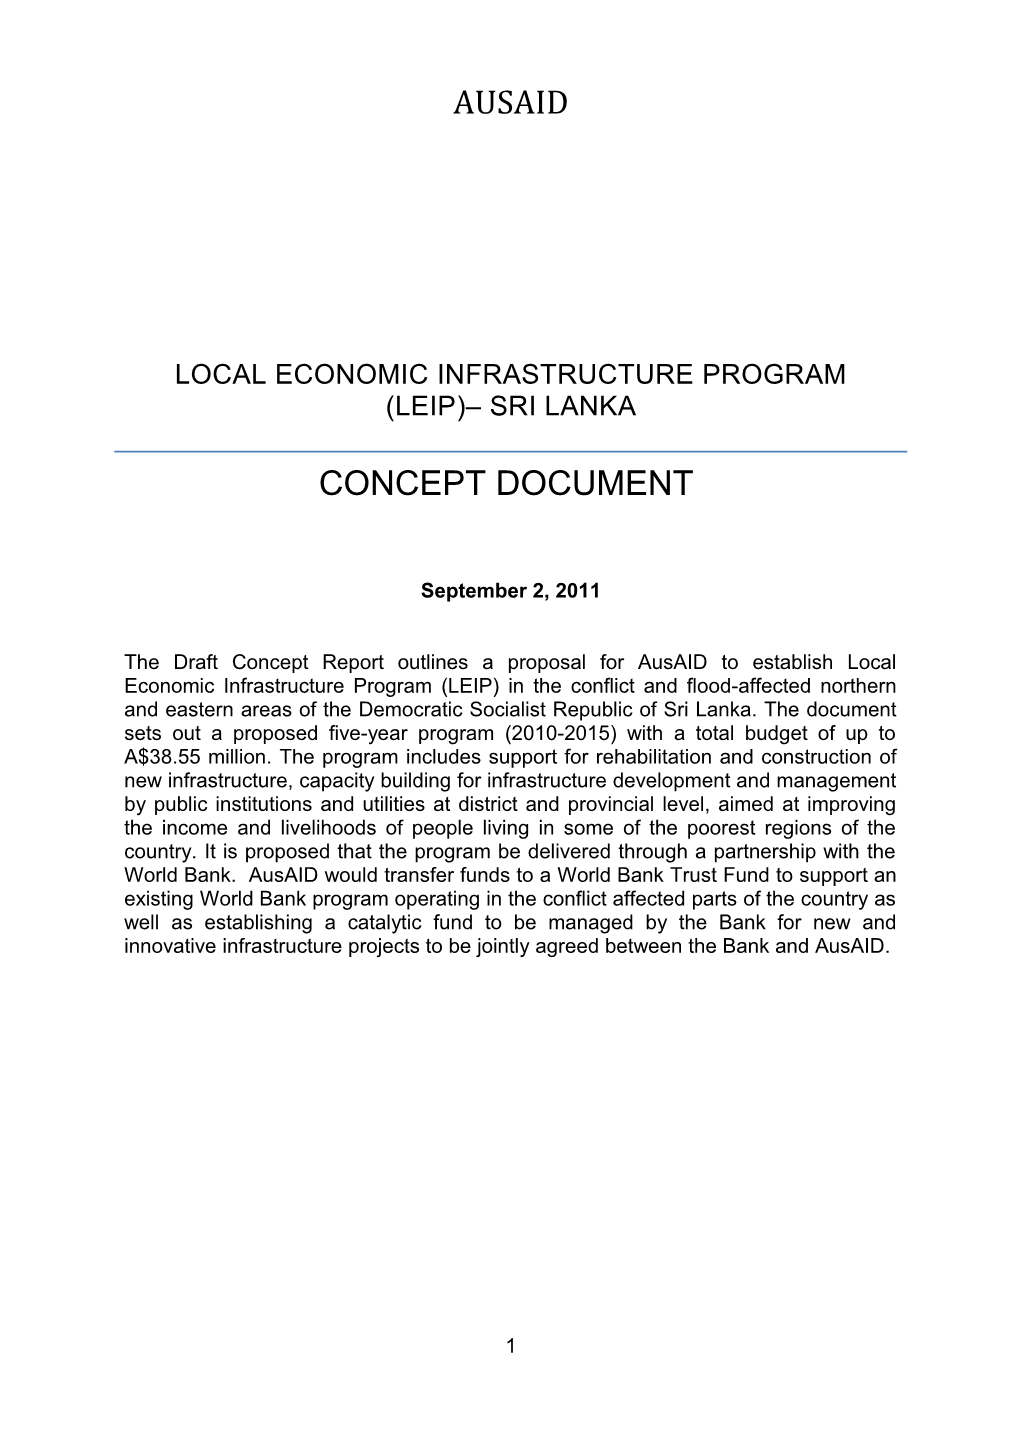 LOCAL ECONOMIC INFRASTRUCTURE PROGRAM (LEIP) Report Concept Design SRI LANKA